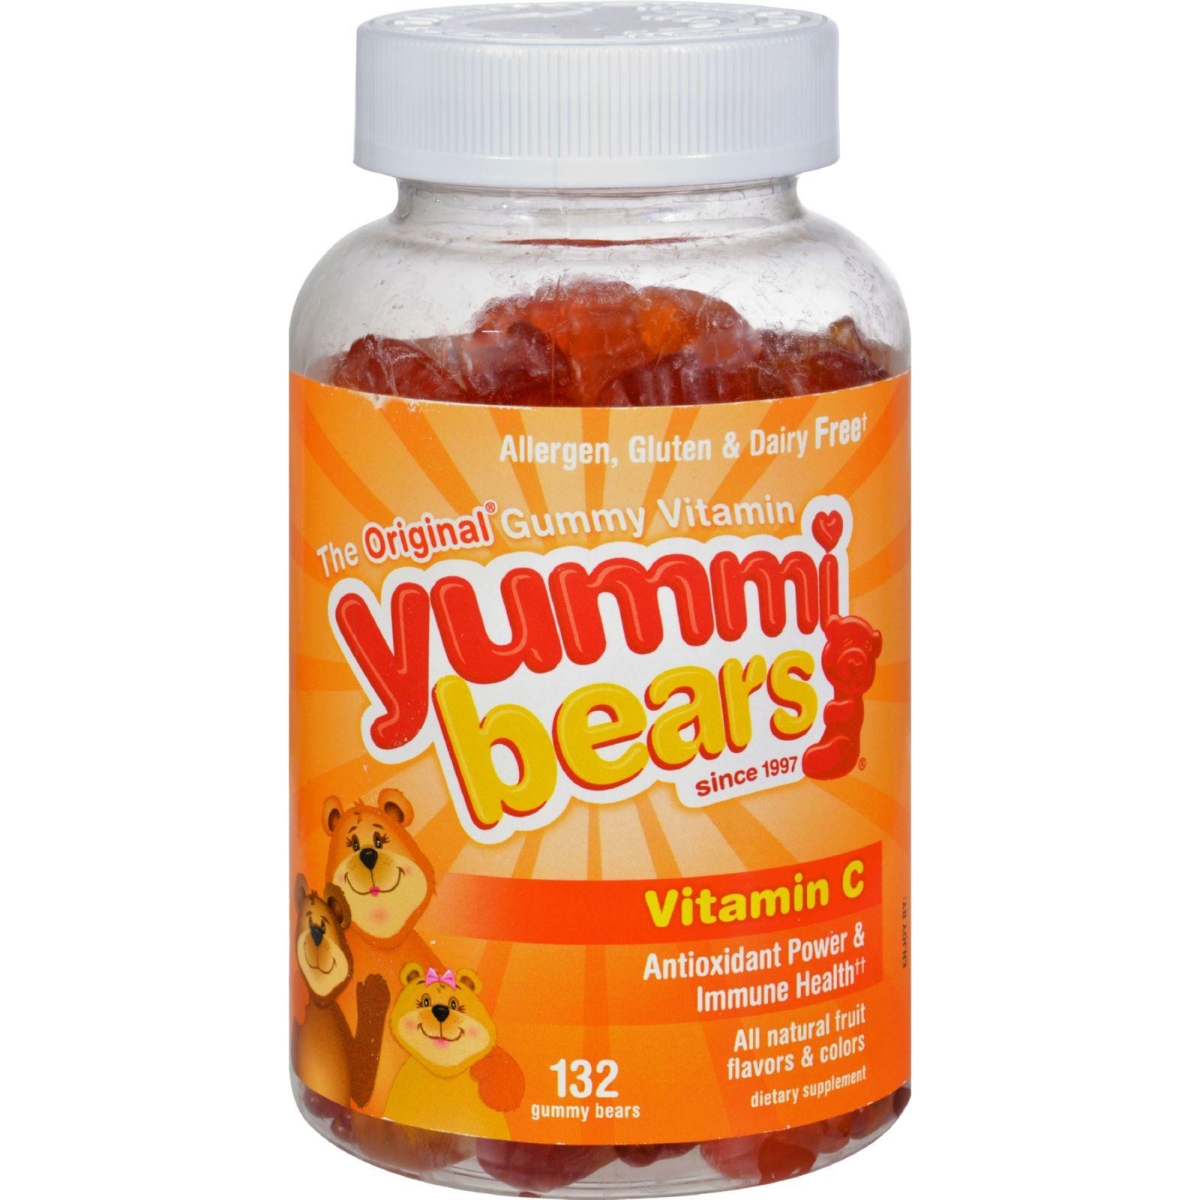 Hg0883835 Yummi Bears Vitamin C - 132 Gummy Bears